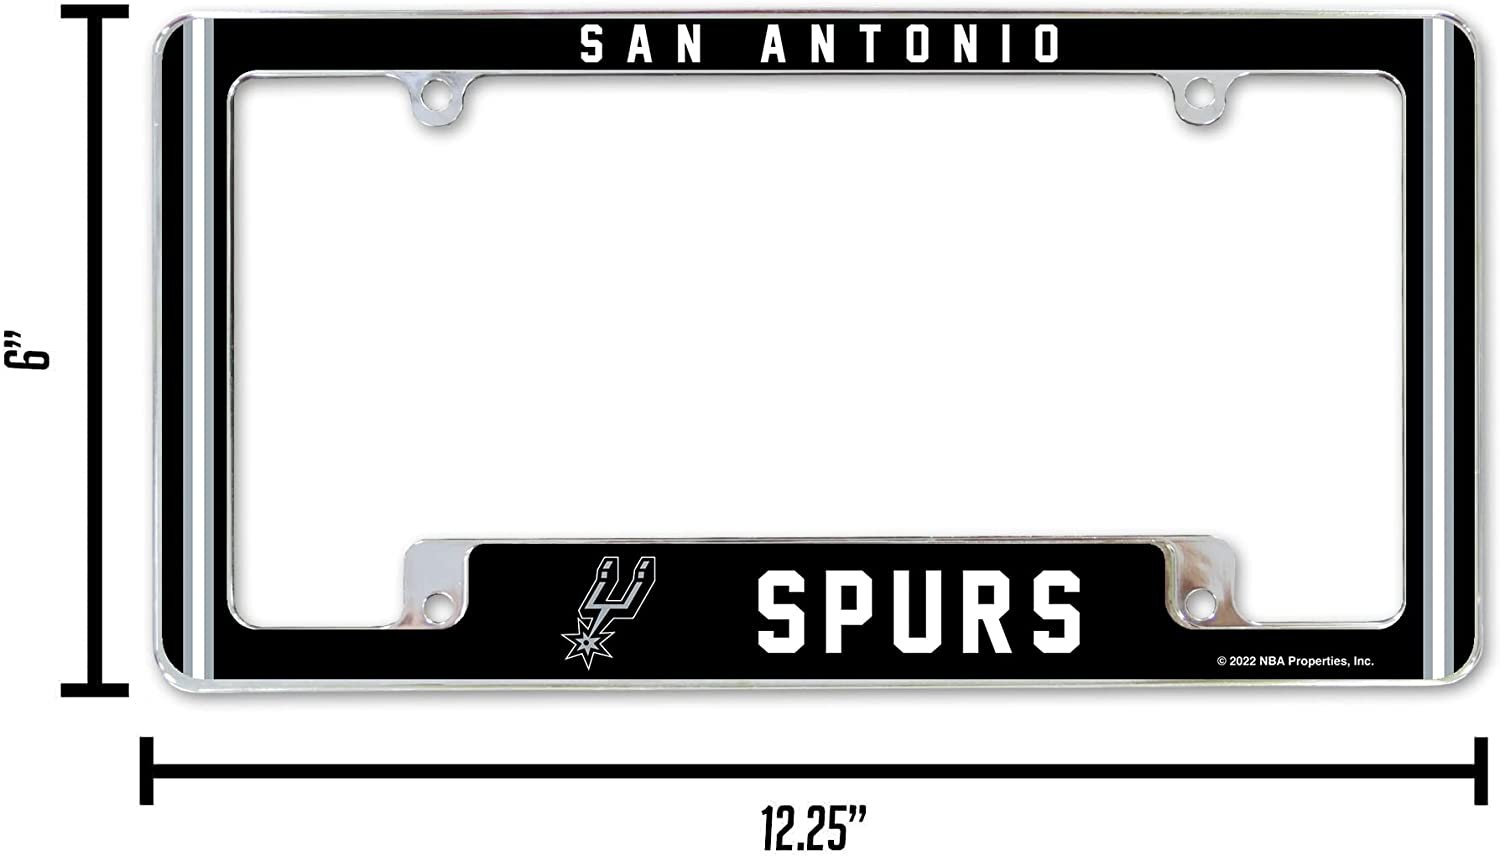 San Antonio Spurs Metal License Plate Frame Chrome Tag Cover Alternate Design 6x12 Inch